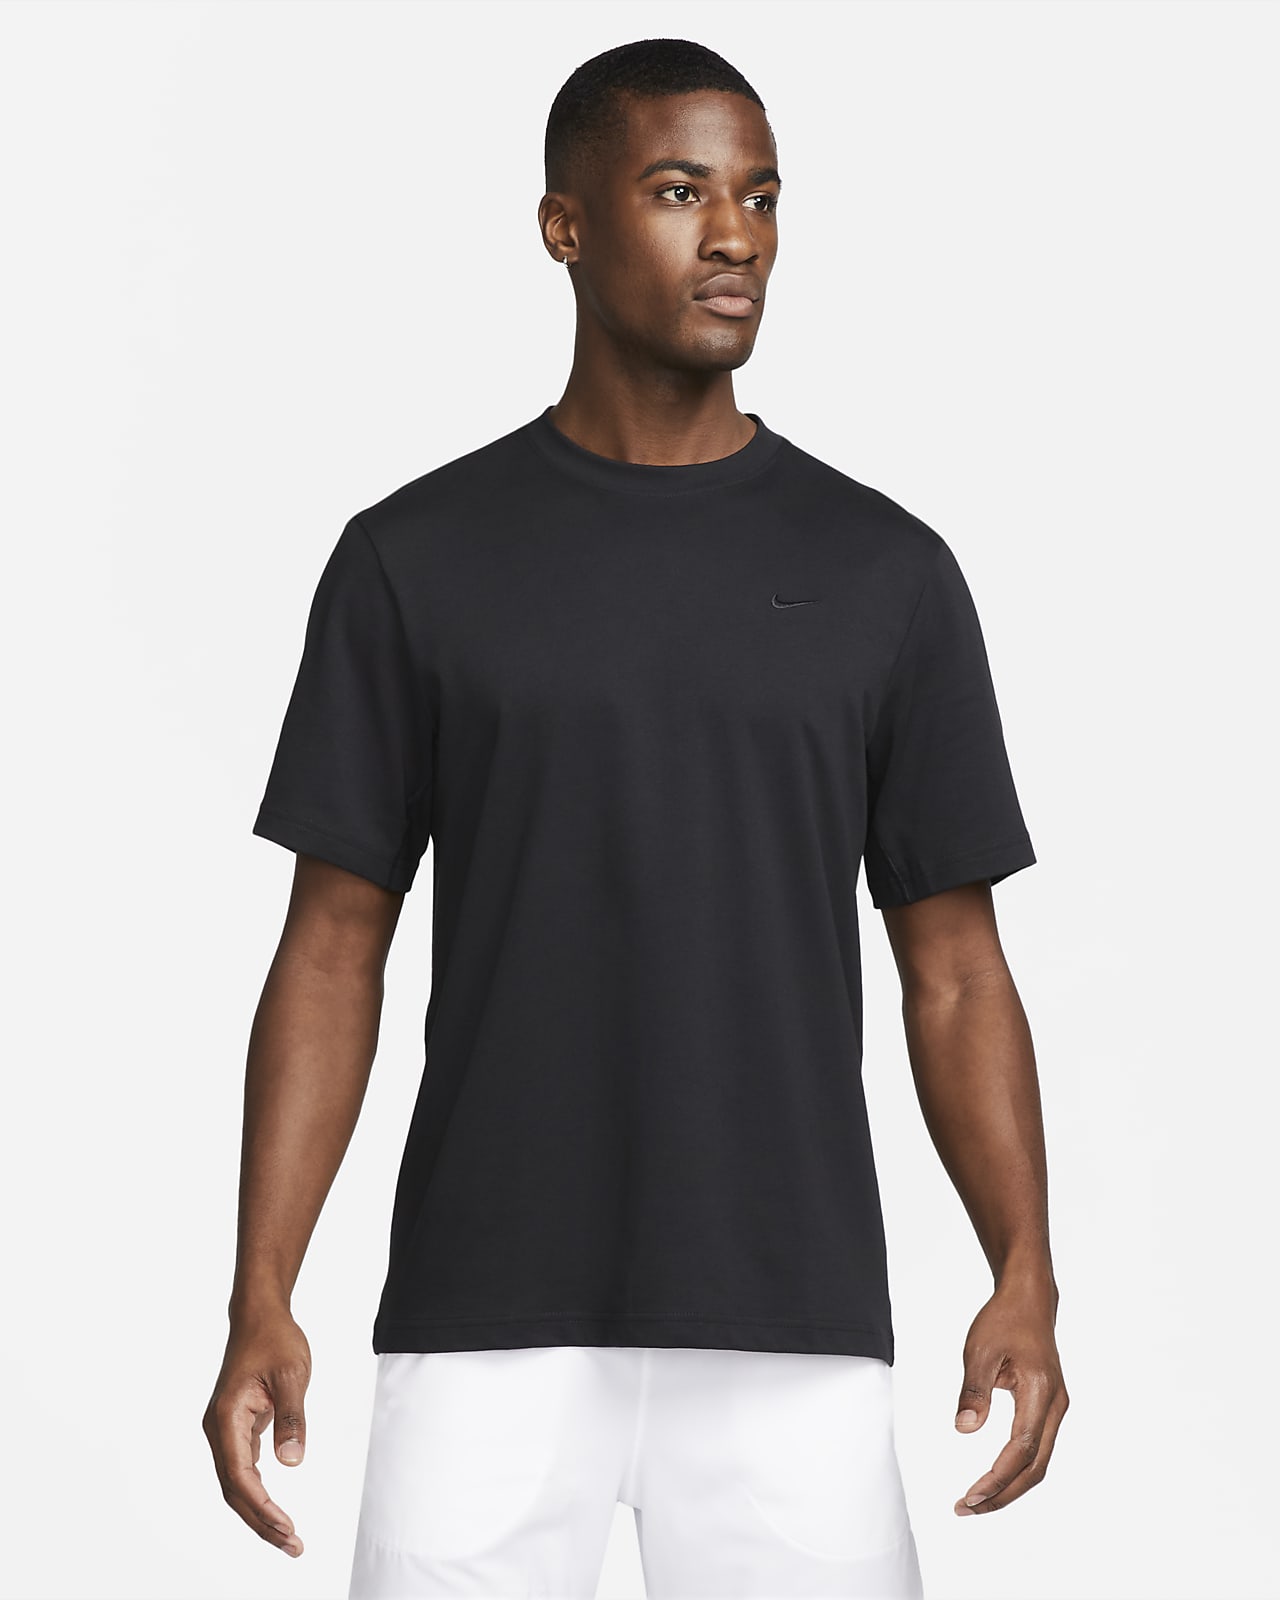 Men's Dri-FIT Short-Sleeve Versatile Top. Nike.com